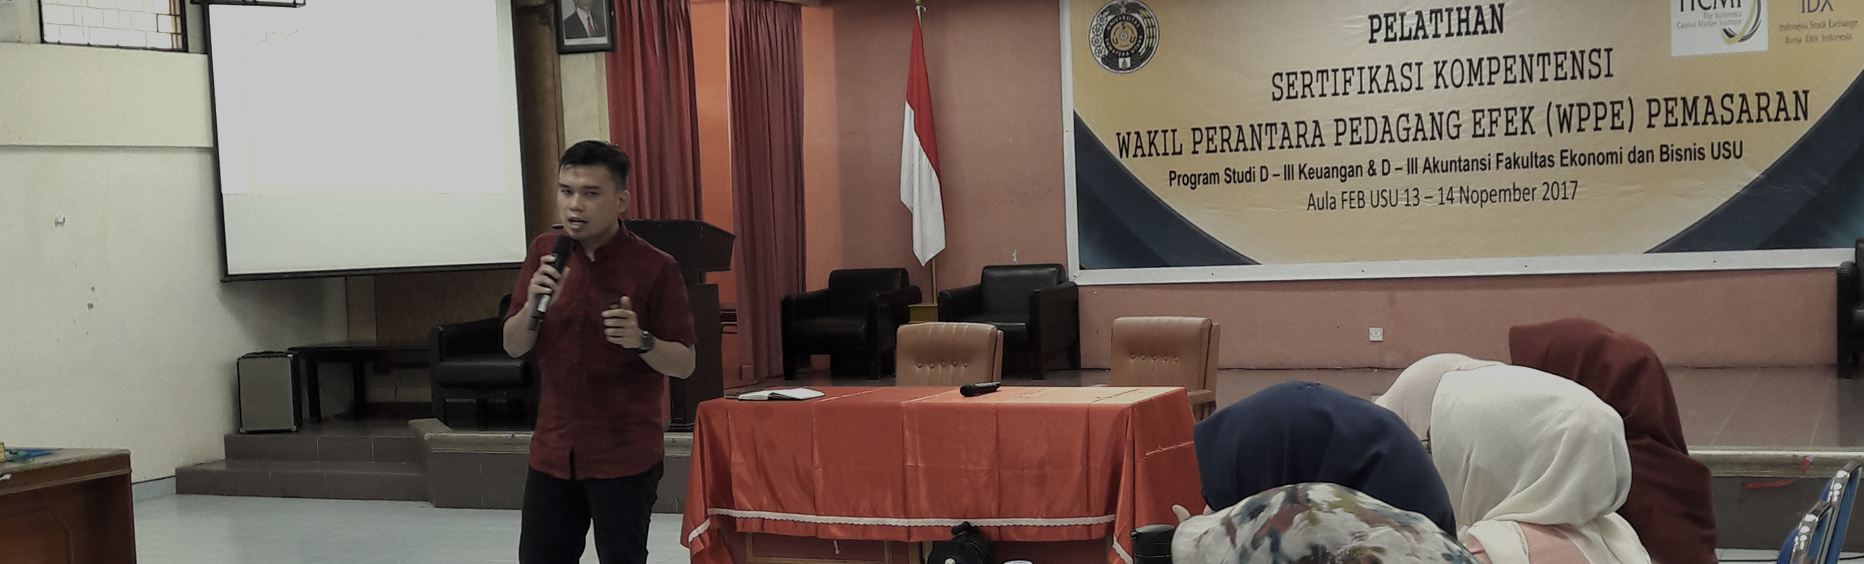 Pelatihan WPPE ( Wakil Perantara Pedagang Efek )  Pemasaran oleh TICMI ( The Indonesia Capital Market Institute )